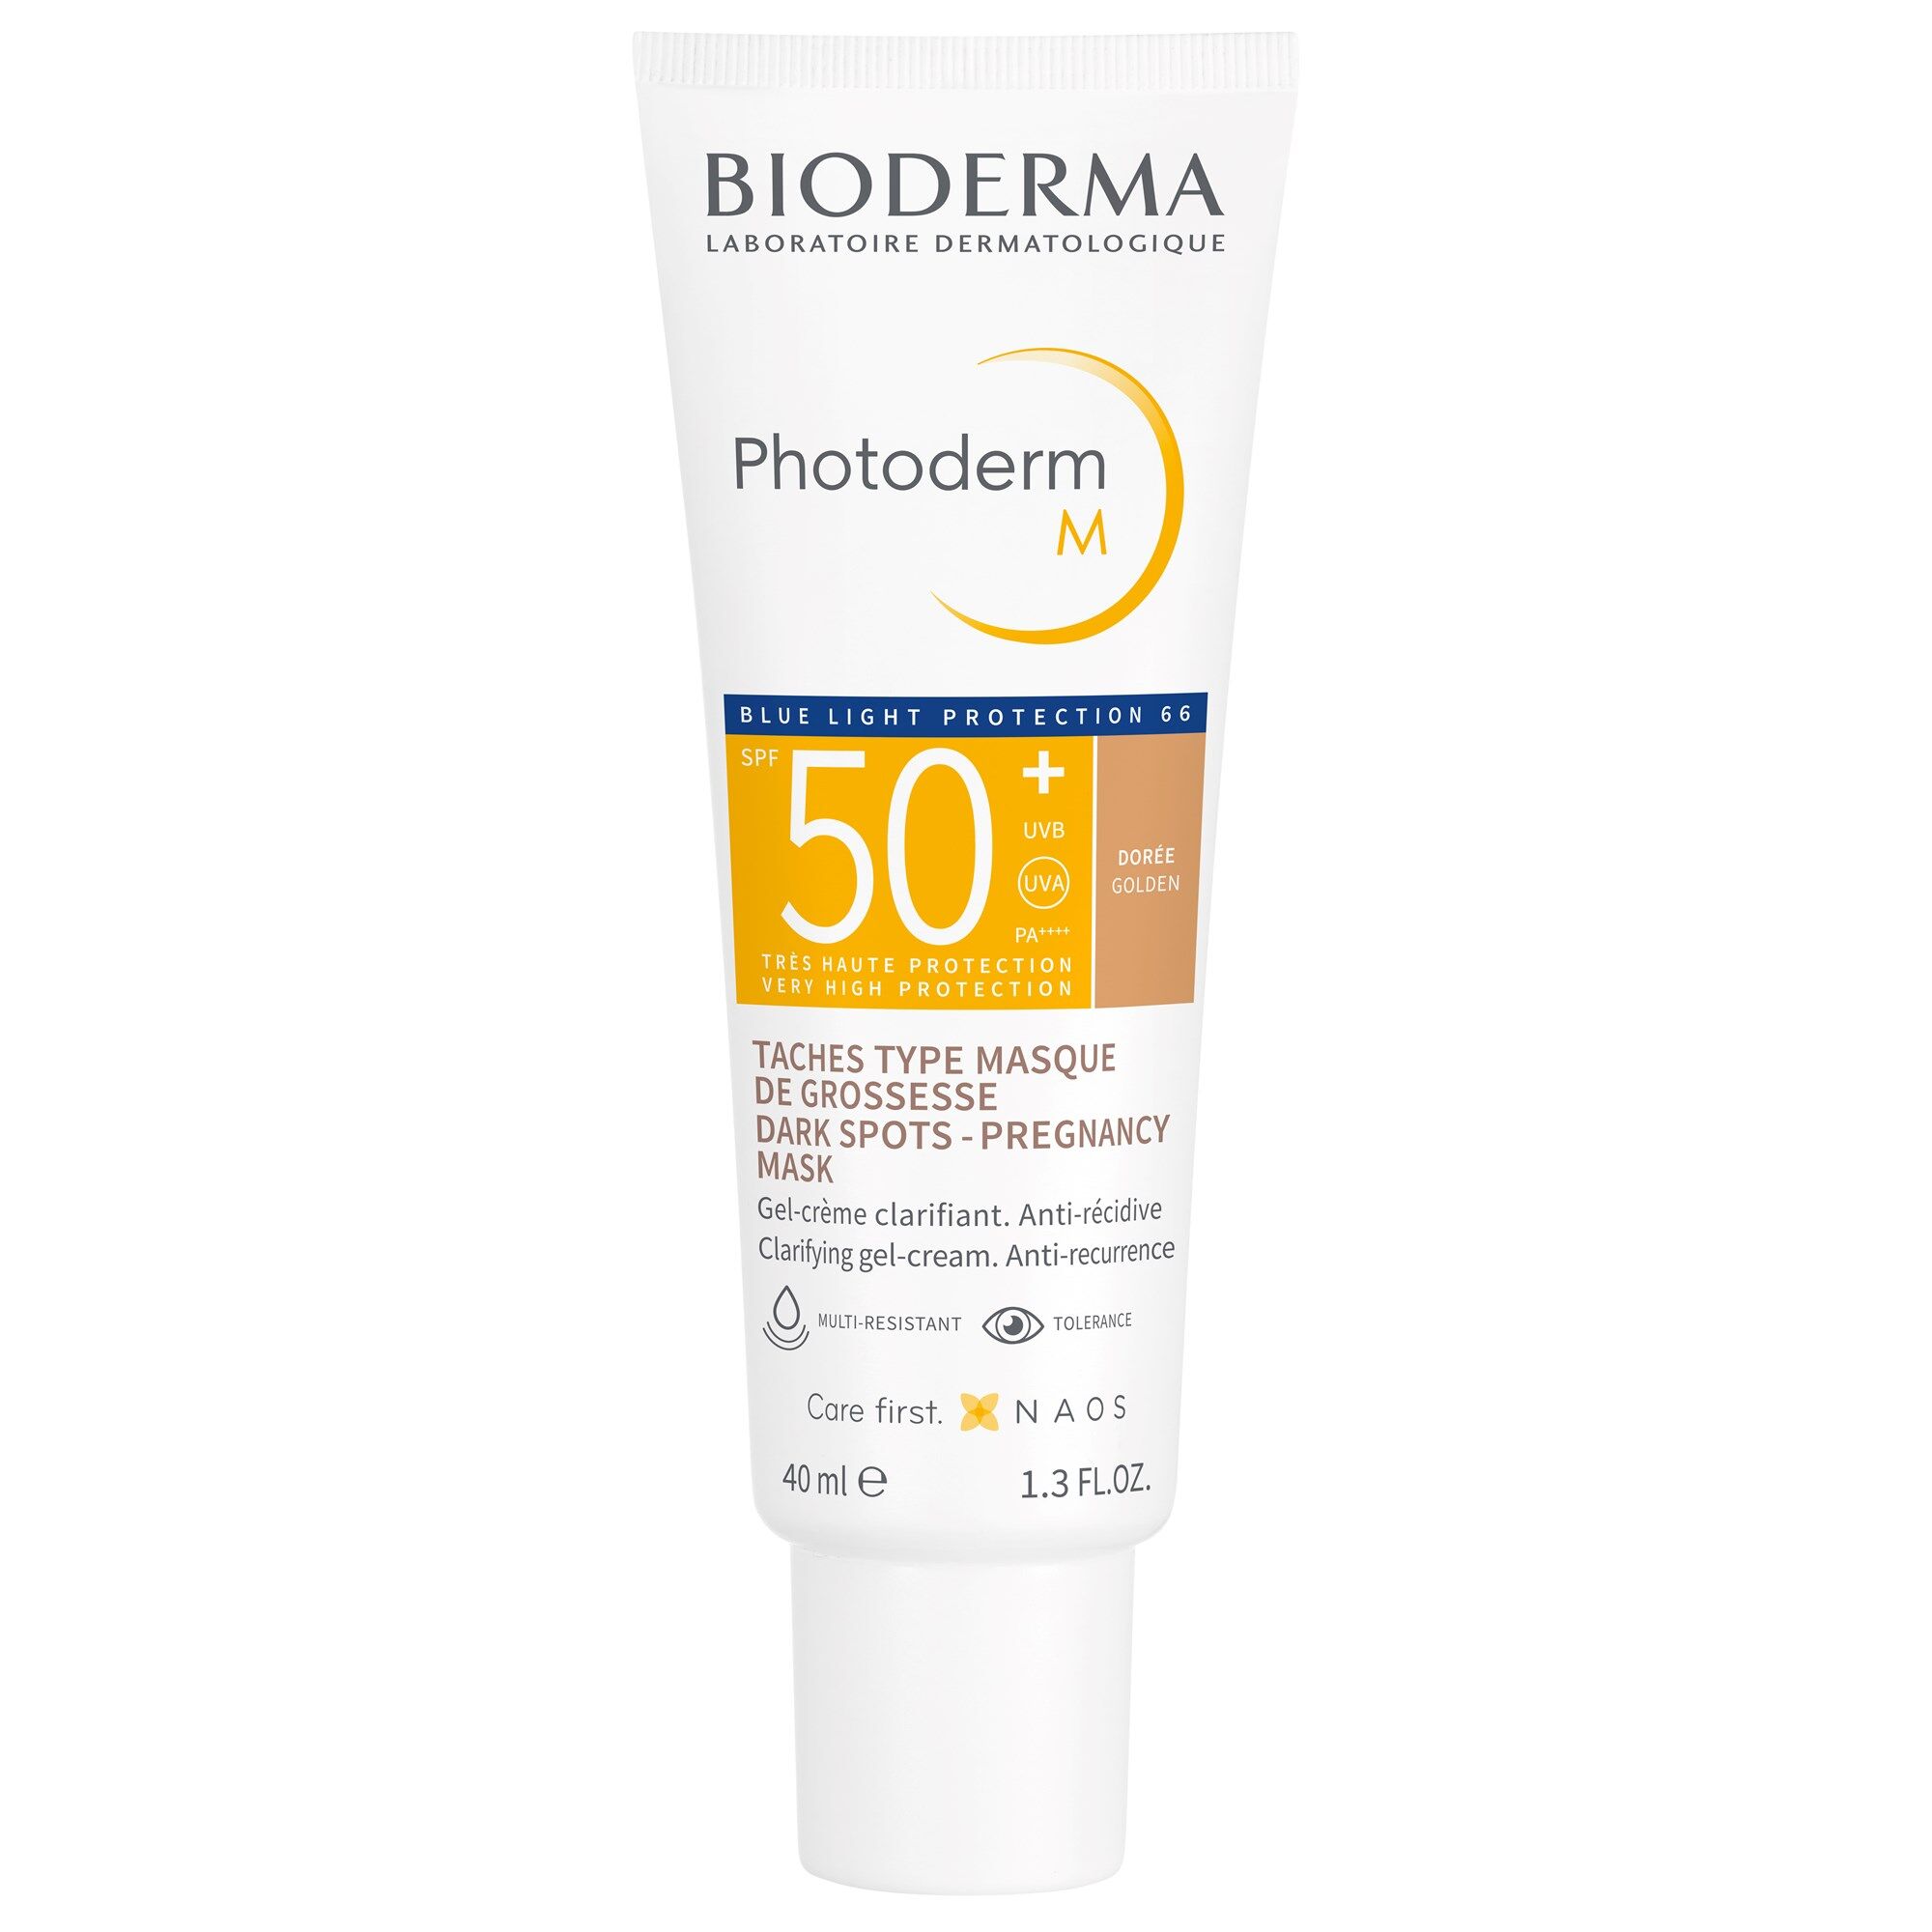 Bioderma Photoderm M SPF50+ Crema para pieles con melasma 40mL Doré SPF50+